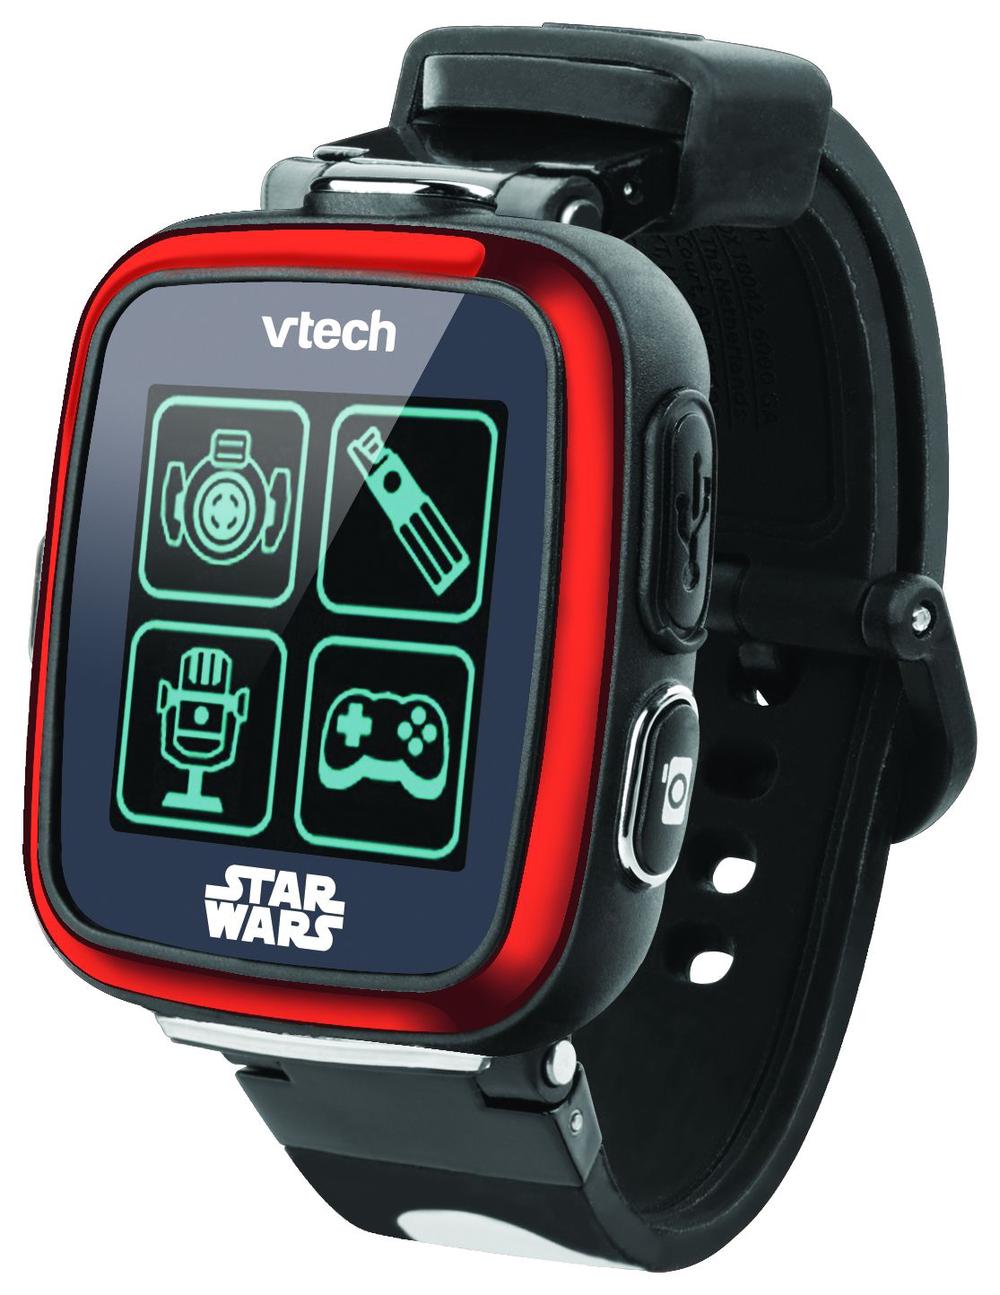 vtech star wars stormtrooper camera watch